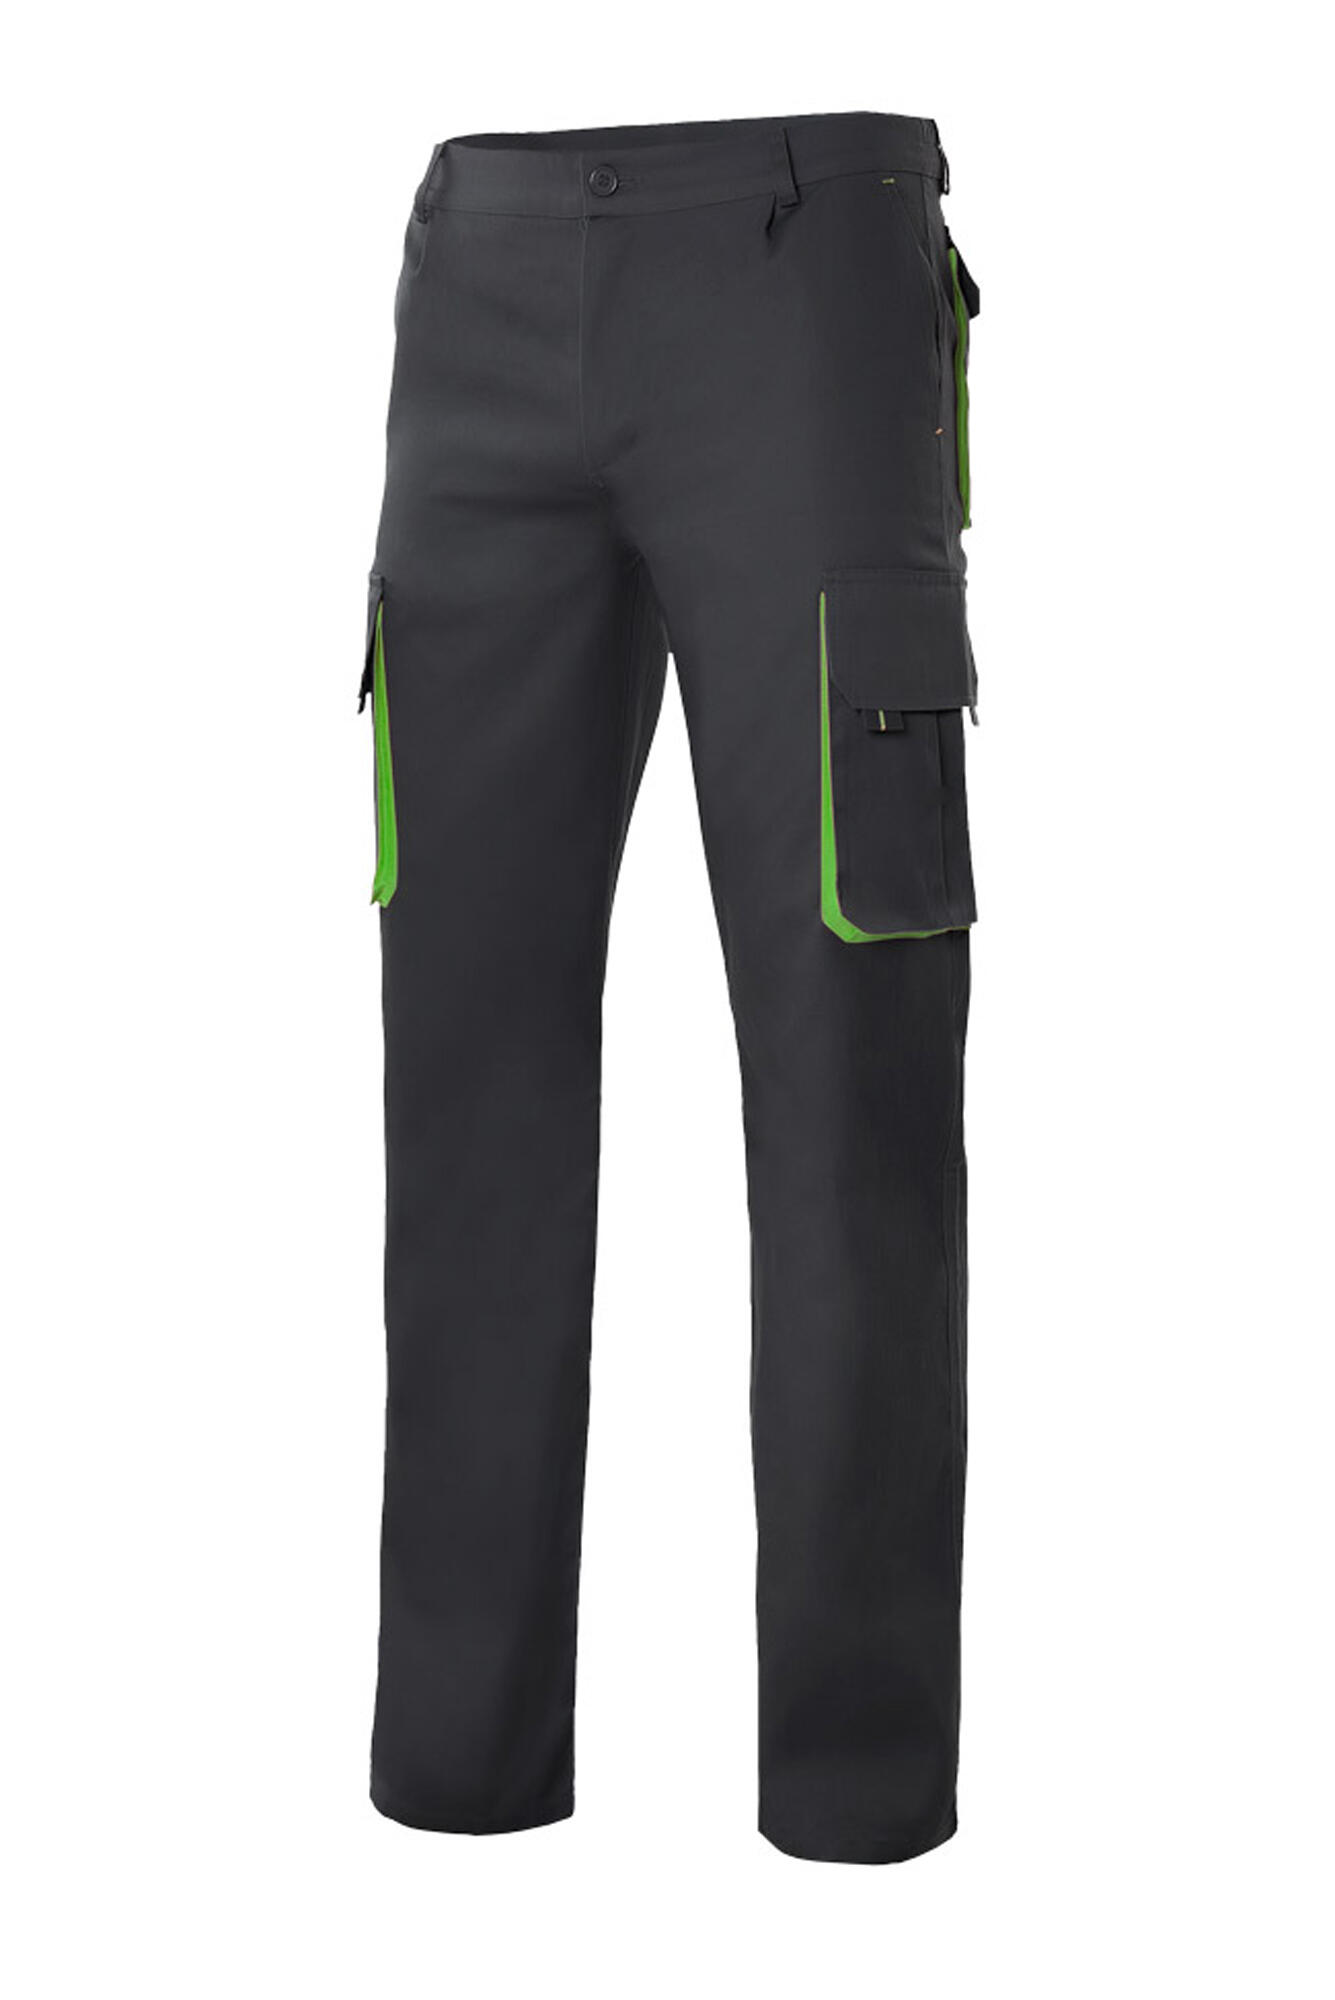 Pantalon de trabajo bicolor multibol negr/verdelima t44